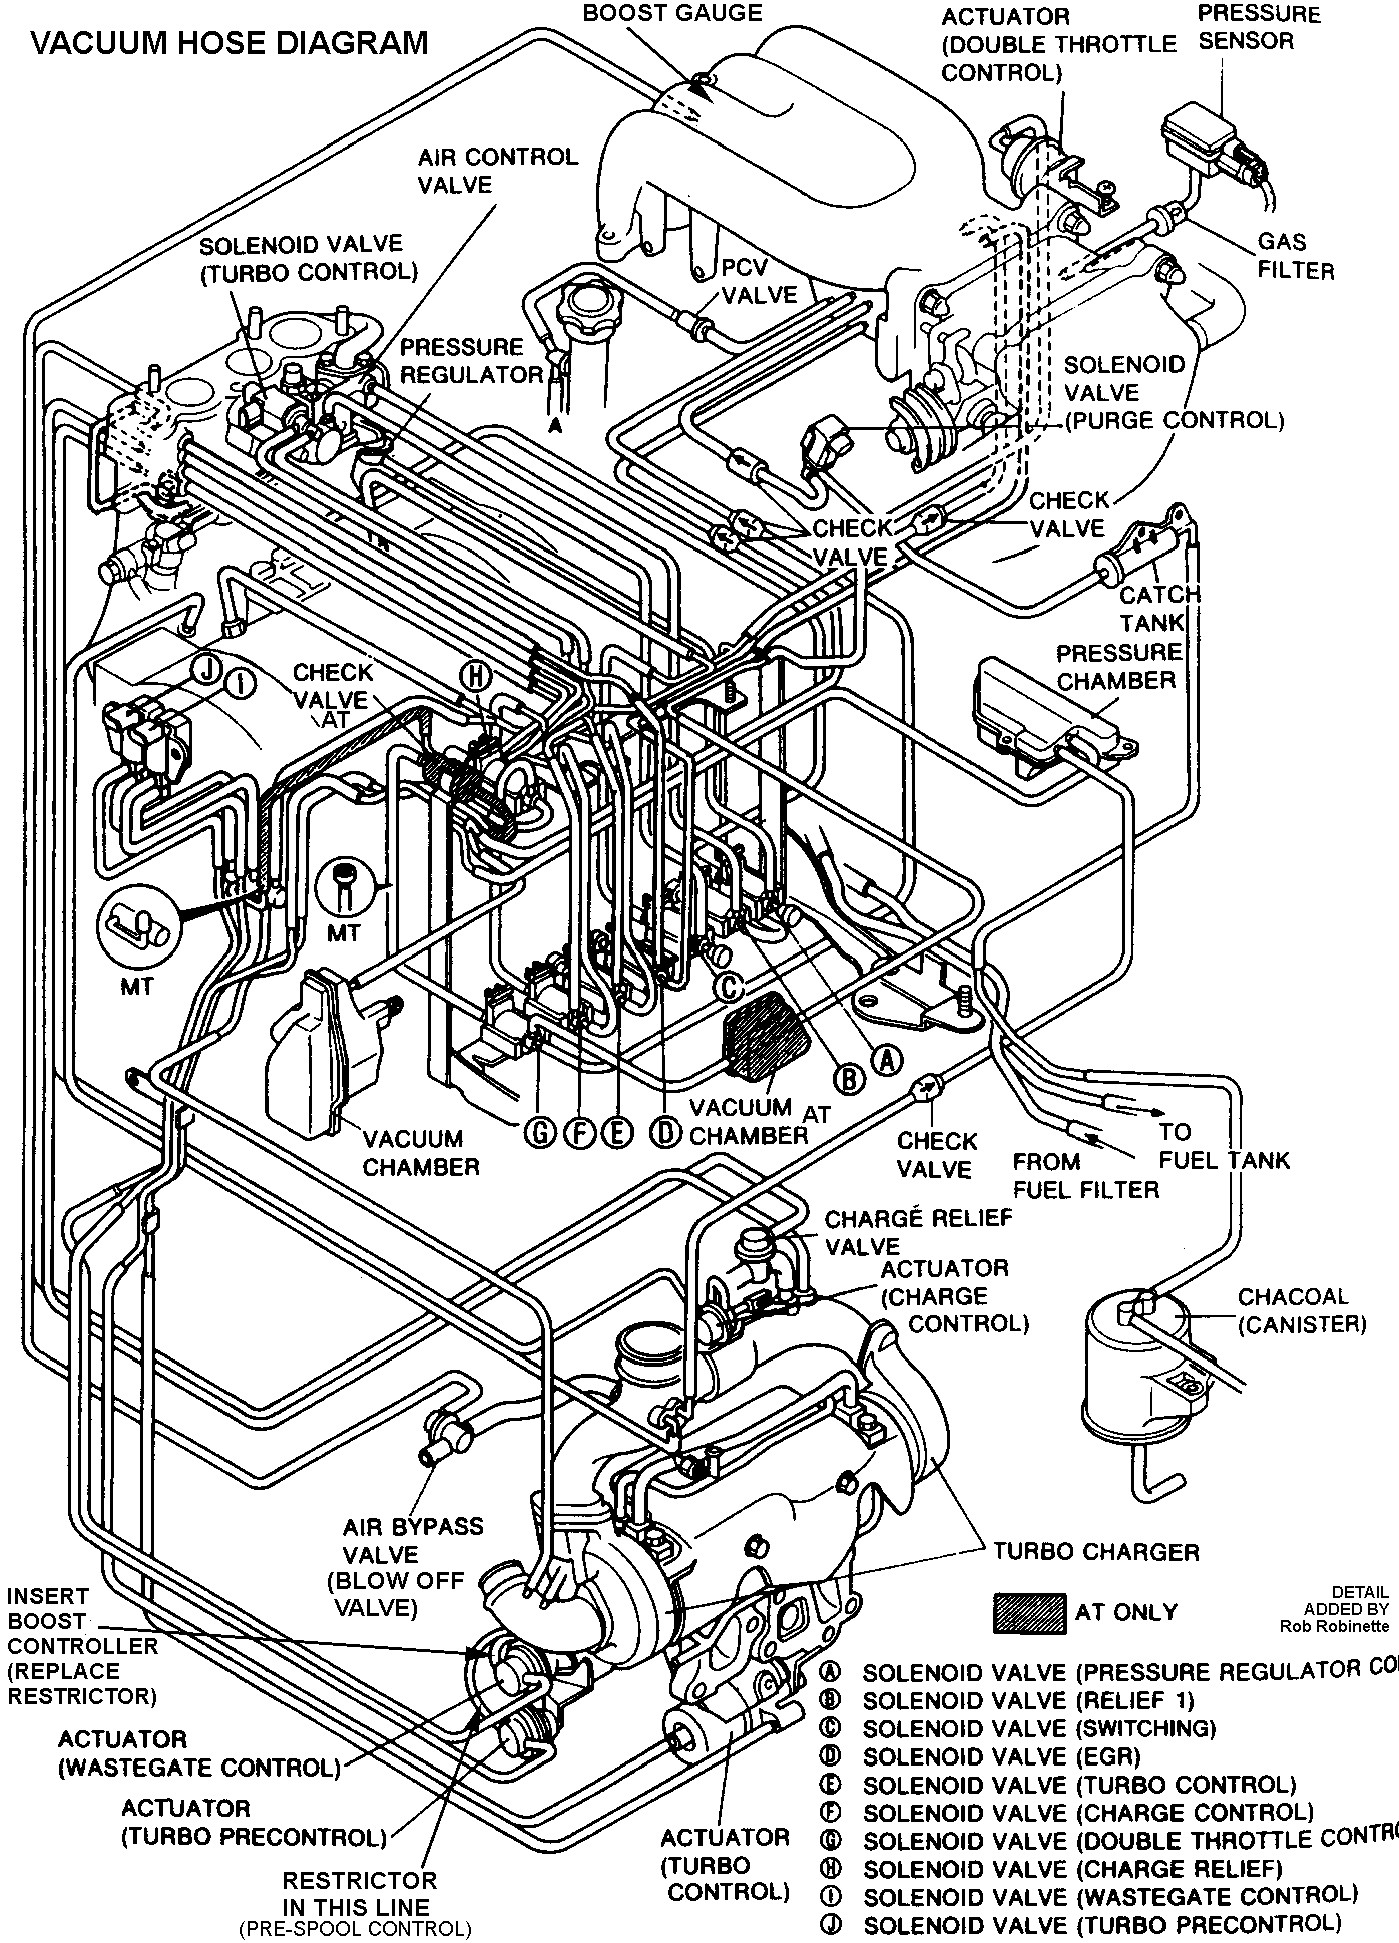 Mazda 6 Engine Parts Diagram 94 Miata 1 8 Engine Diagram Another Blog About Wiring Diagram • Of Mazda 6 Engine Parts Diagram